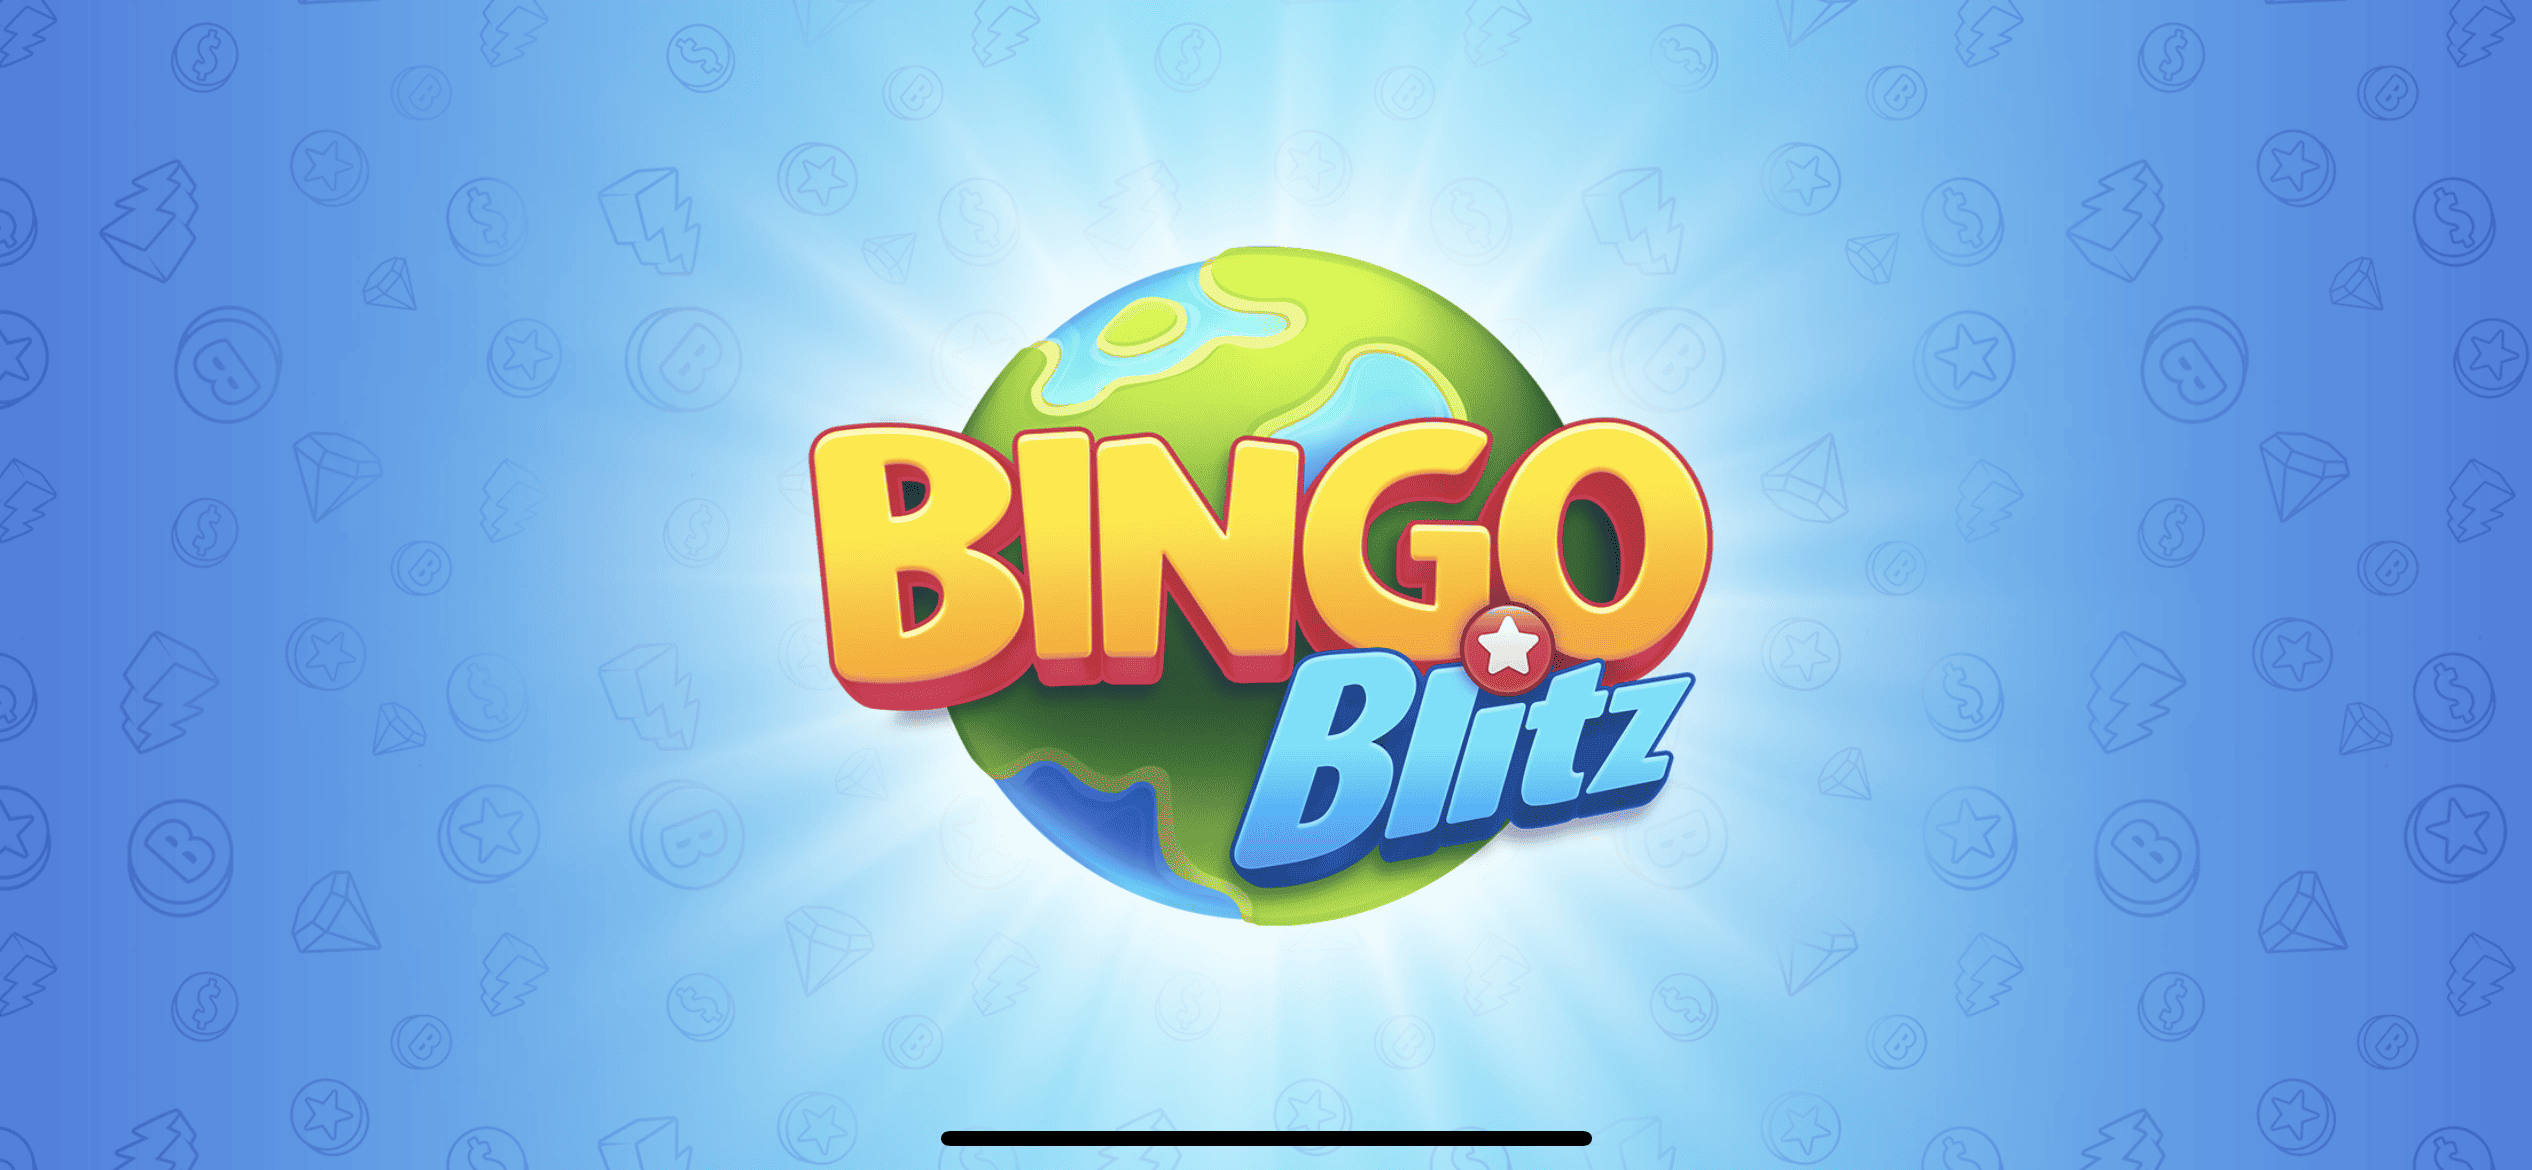 Free Bingo Blitz Credits Crazy